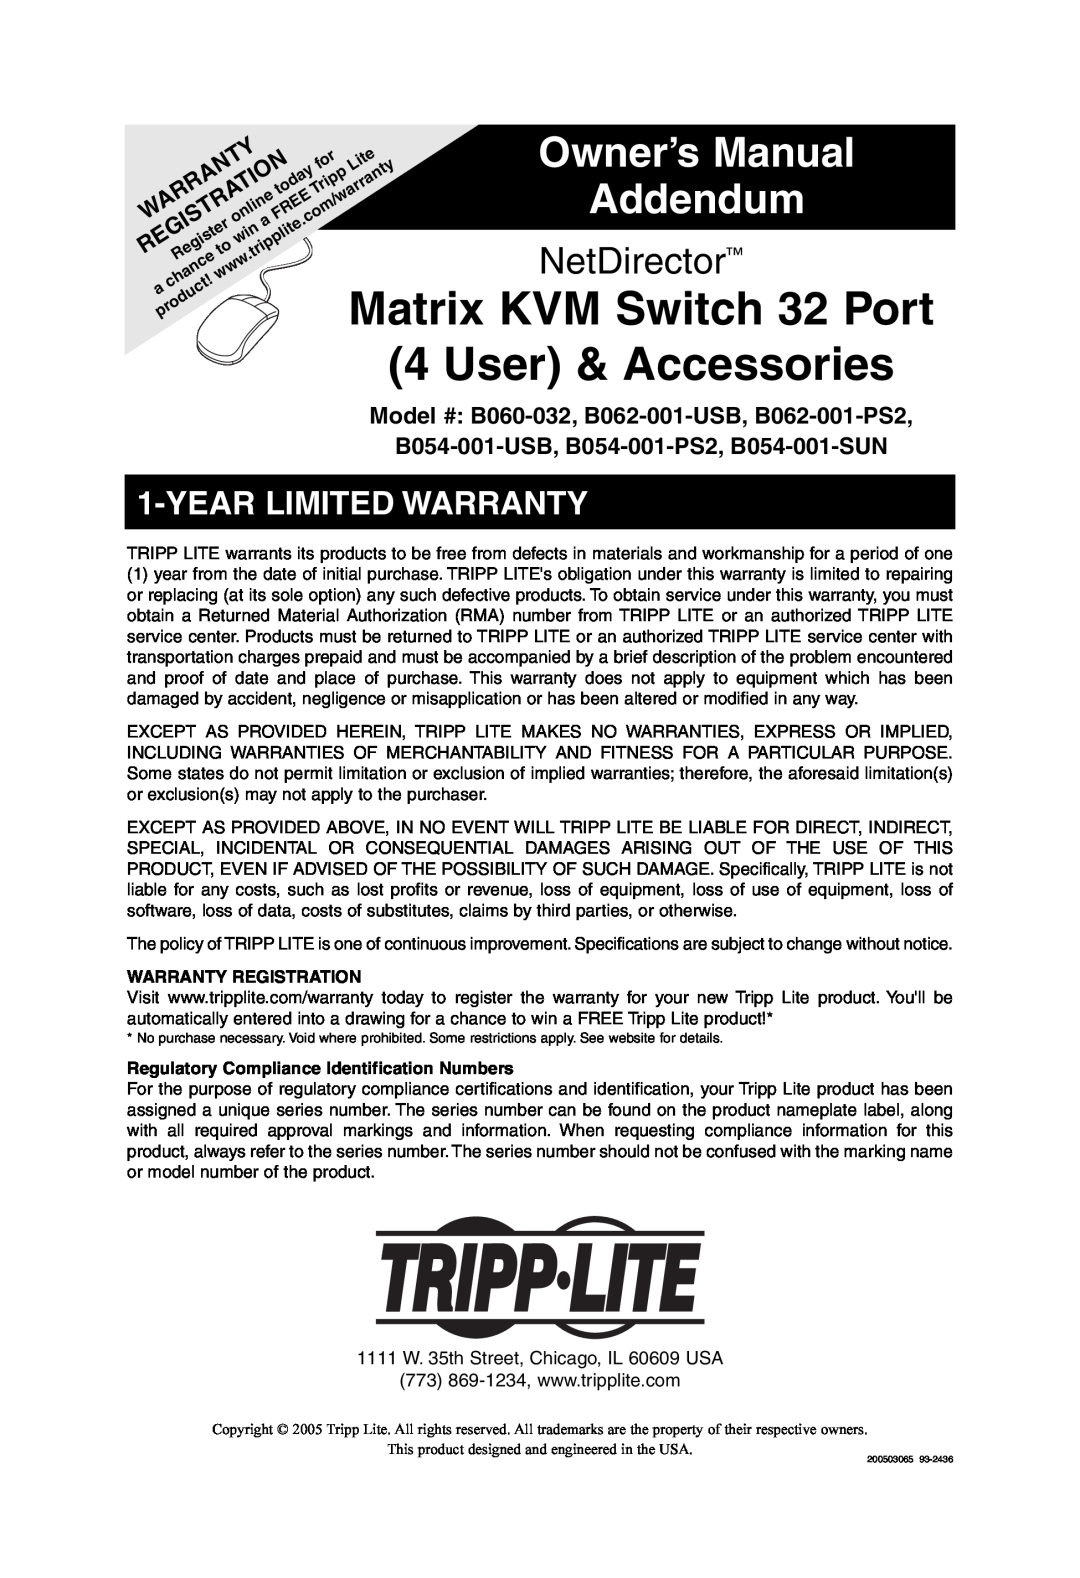 Tripp Lite B054-001-USB owner manual Matrix KVM Switch 32 Port, User & Accessories, Owner’s Manual, Addendum, NetDirector 